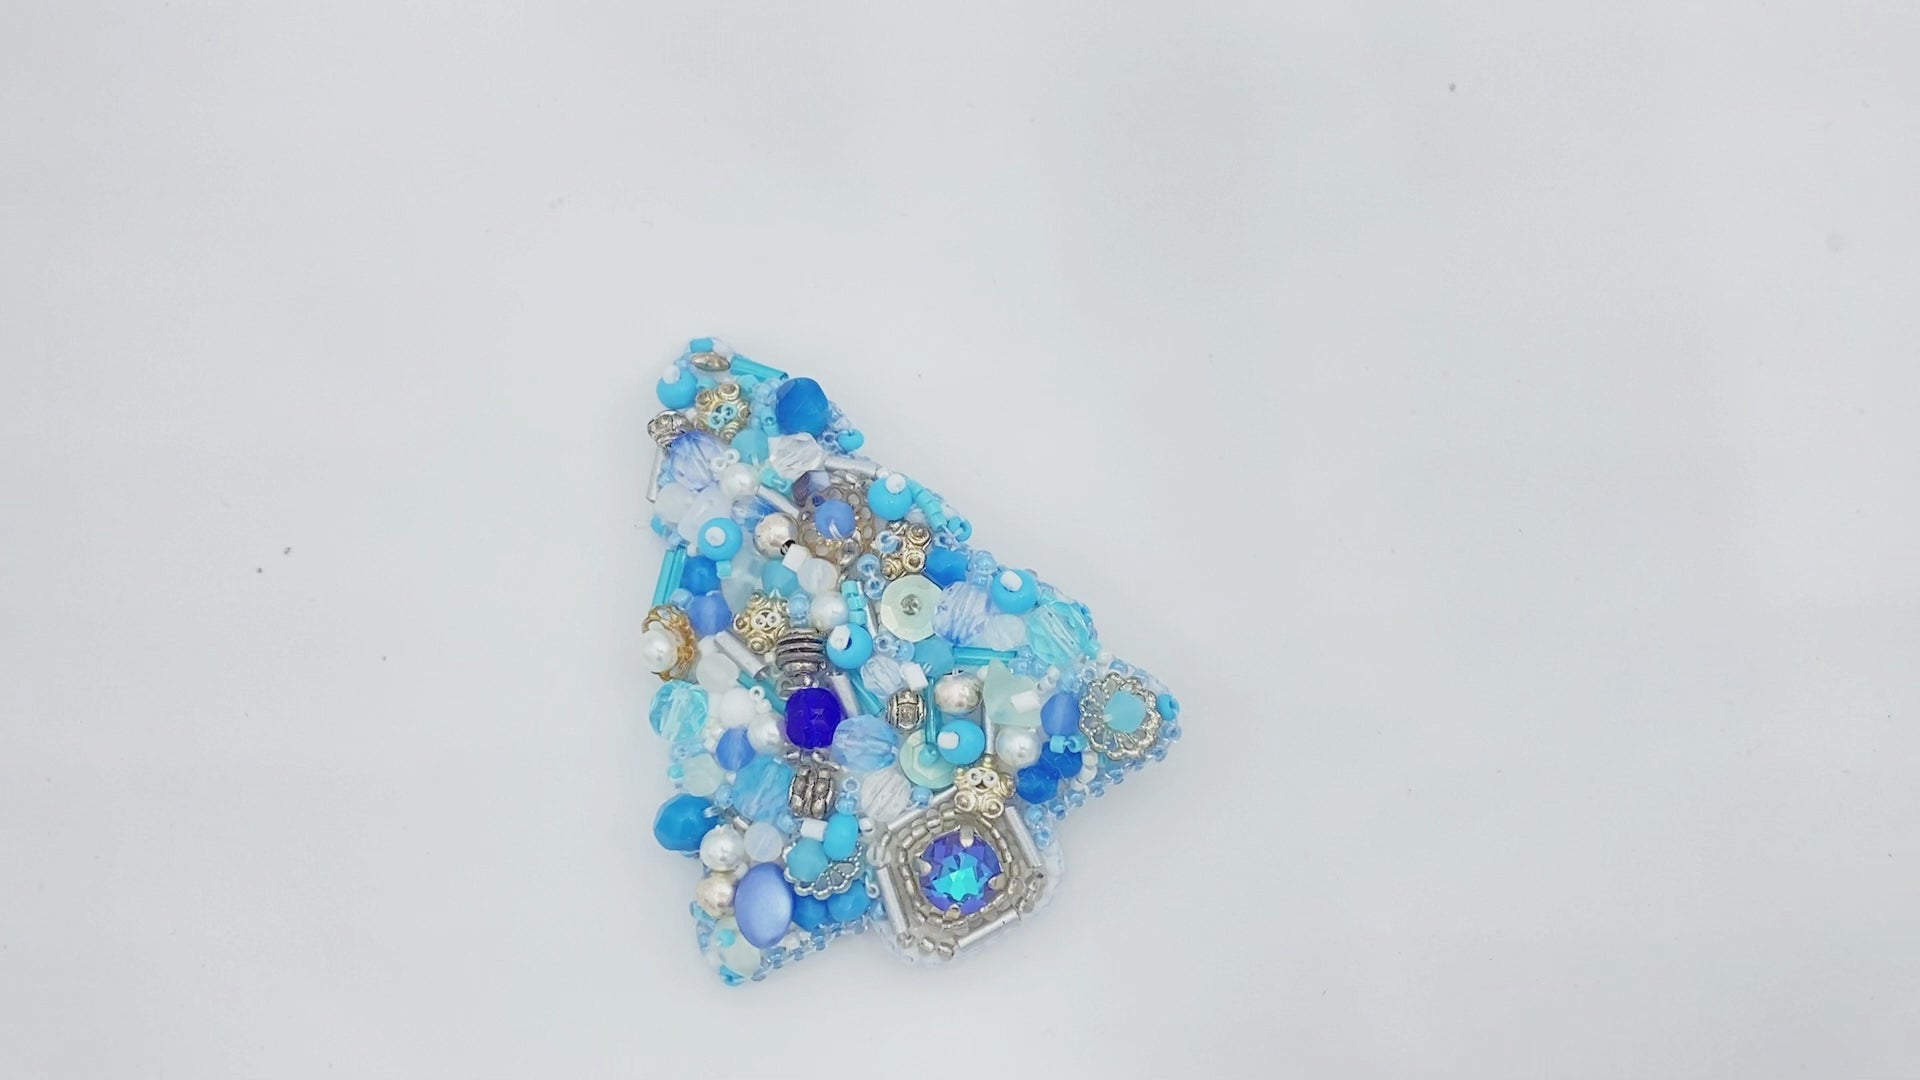 Handmade brooch in the shape of Xmas tree made of glass beads, Miyuki beads, bugle beads and rhinestones - Ornamentico shop